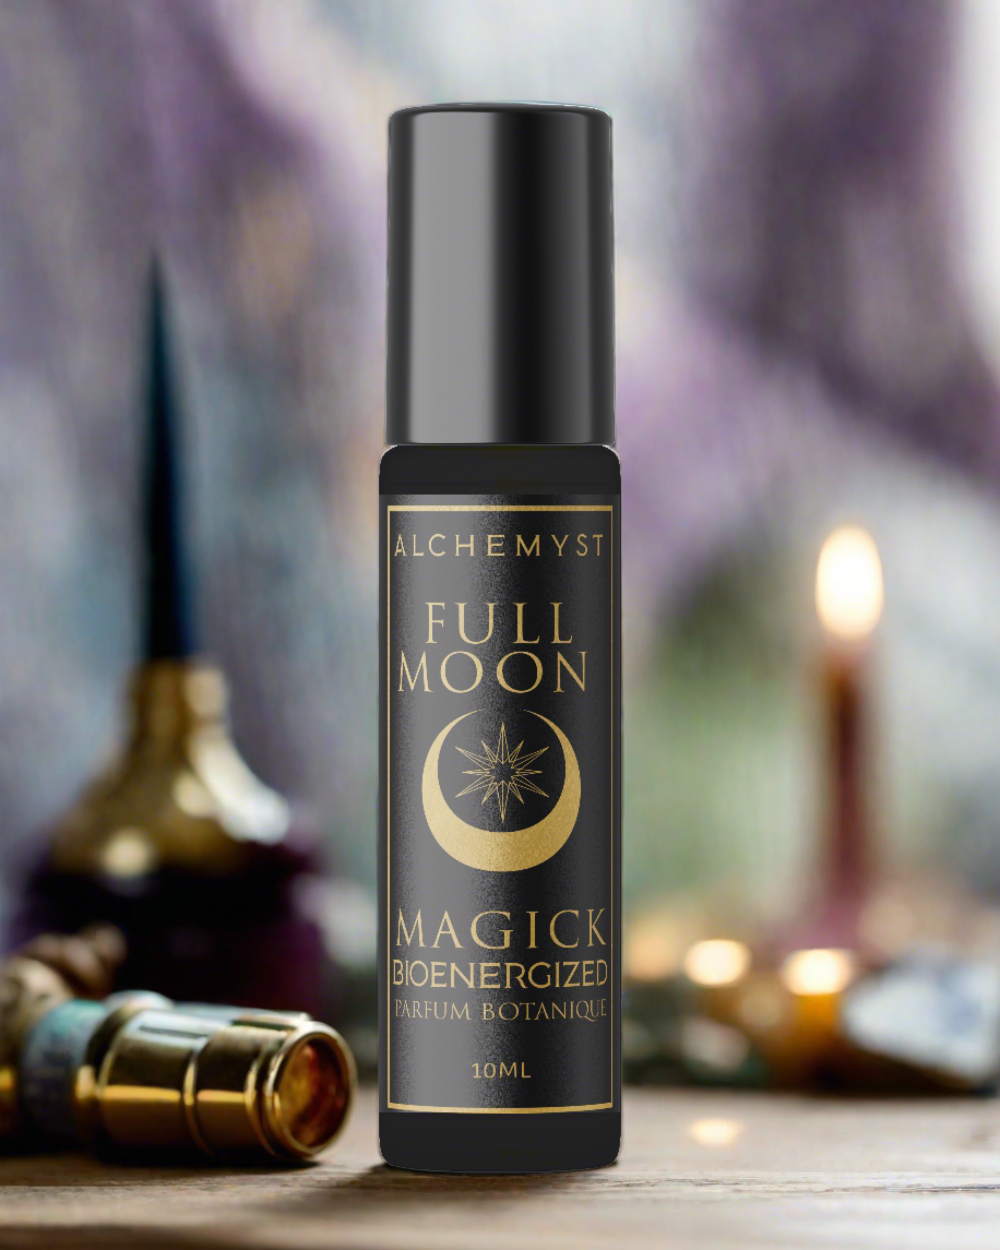 FULL MOON - Bioenergized Natural Perfume Alchemyst Co